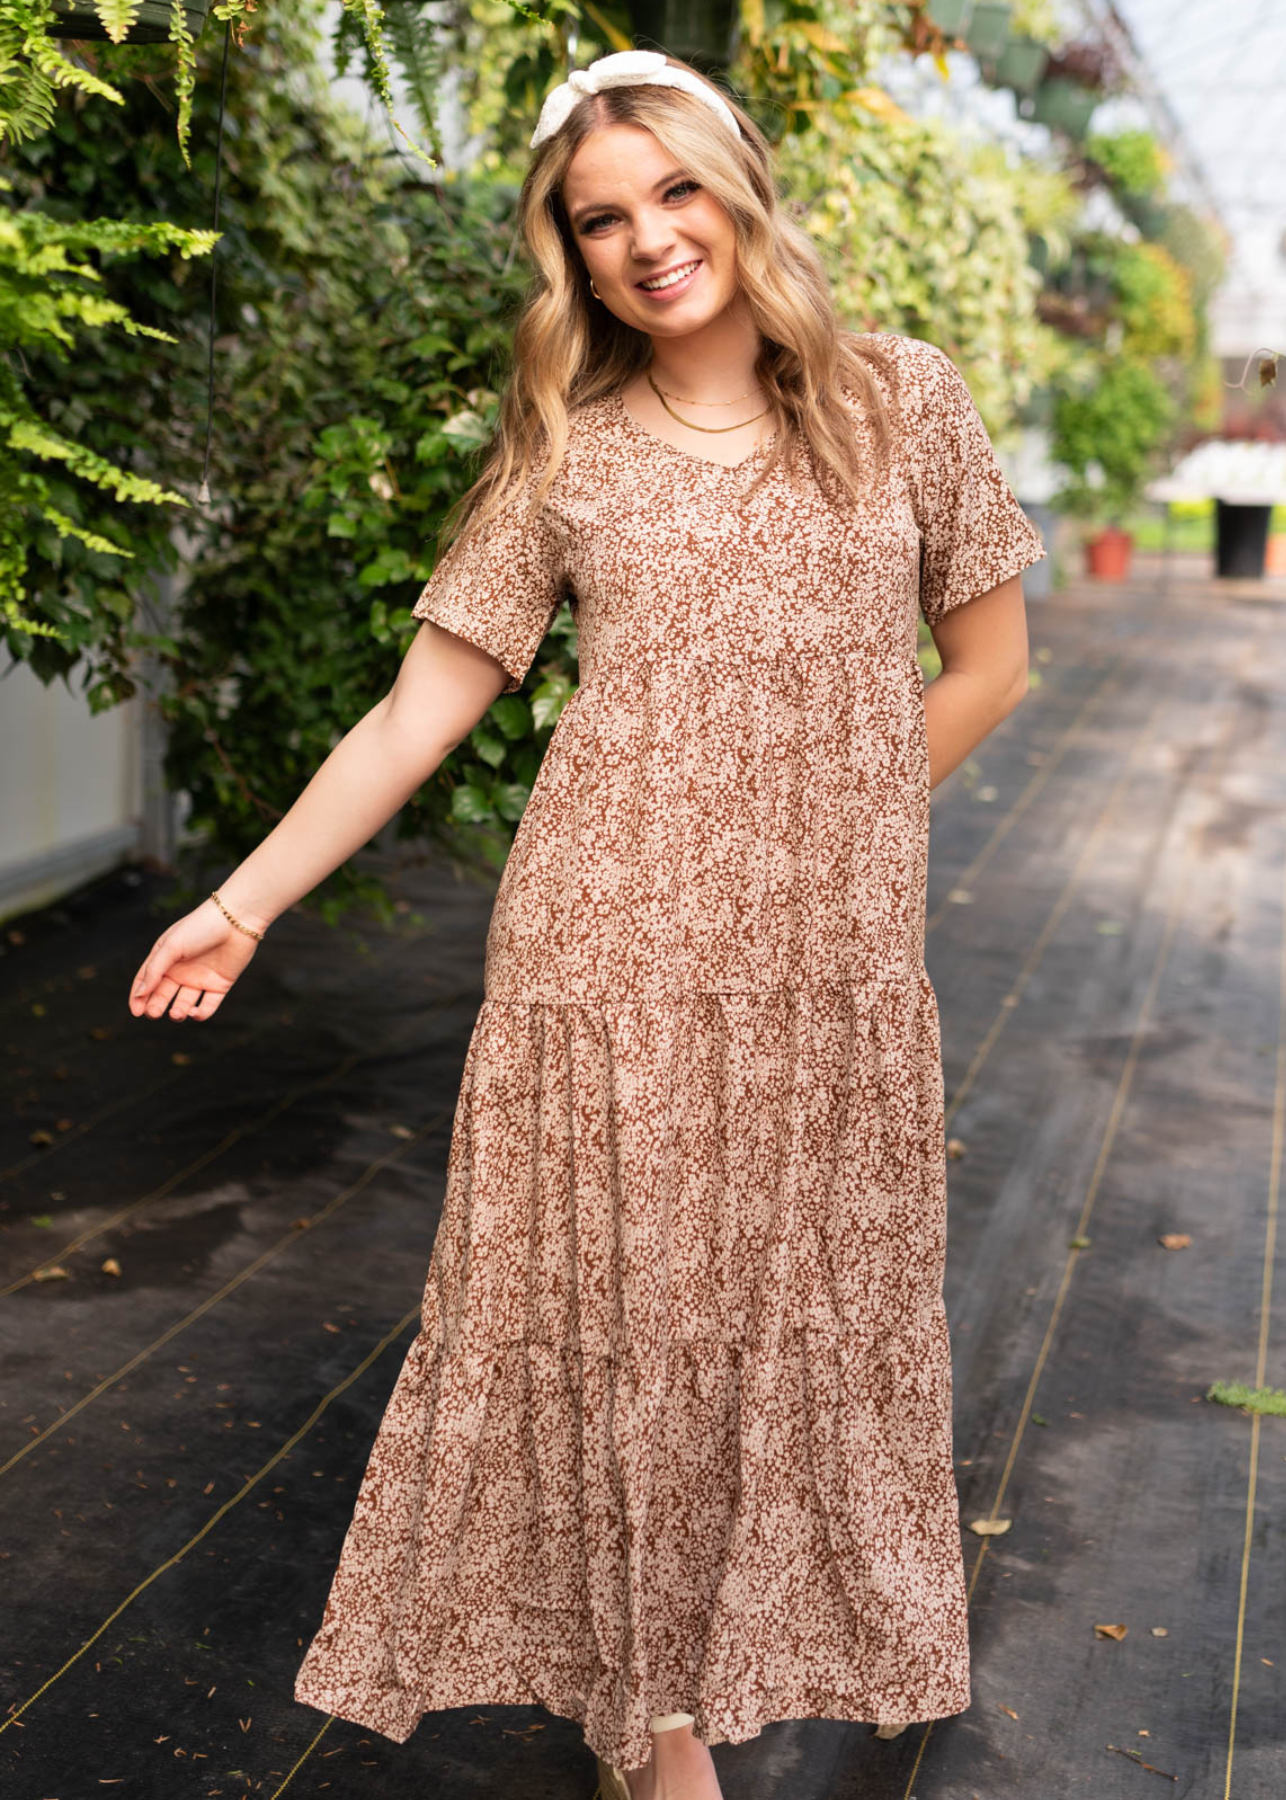 Short sleeve brown floral dress